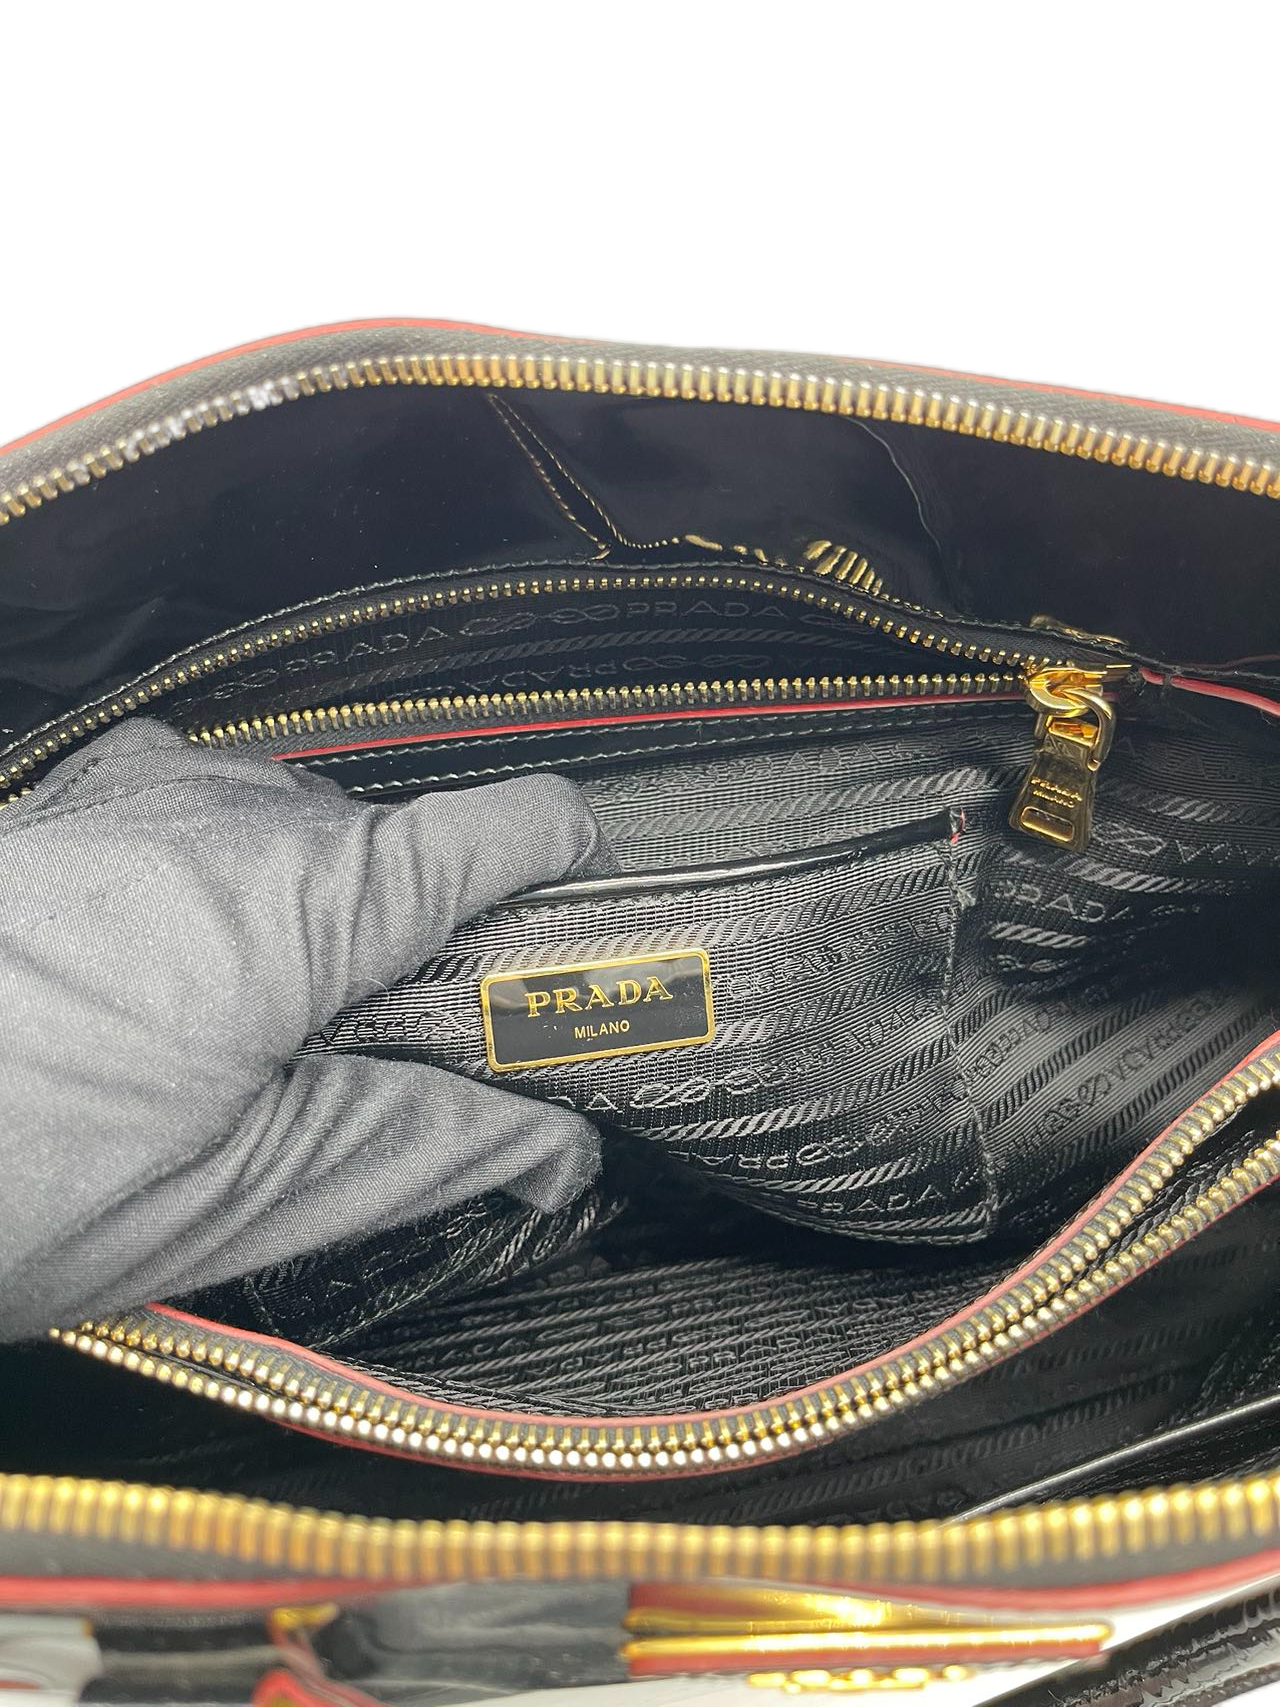 Preloved Prada Black Patent Leather Handbag Satchel